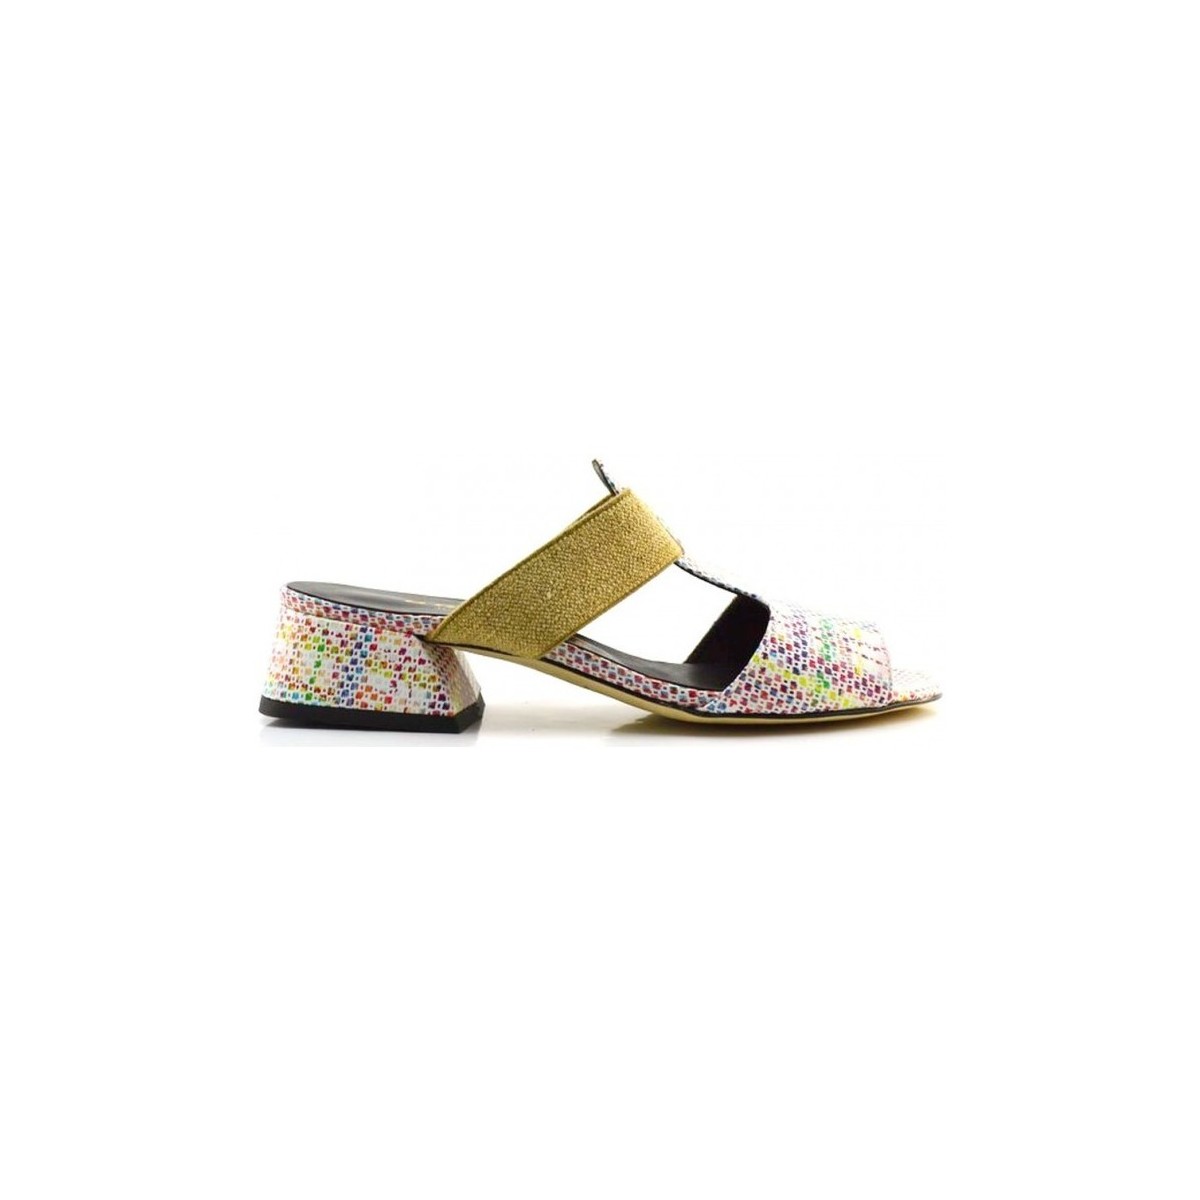 Chaussures Femme Sandales et Nu-pieds Brunate 49542 pulce multi Multicolore